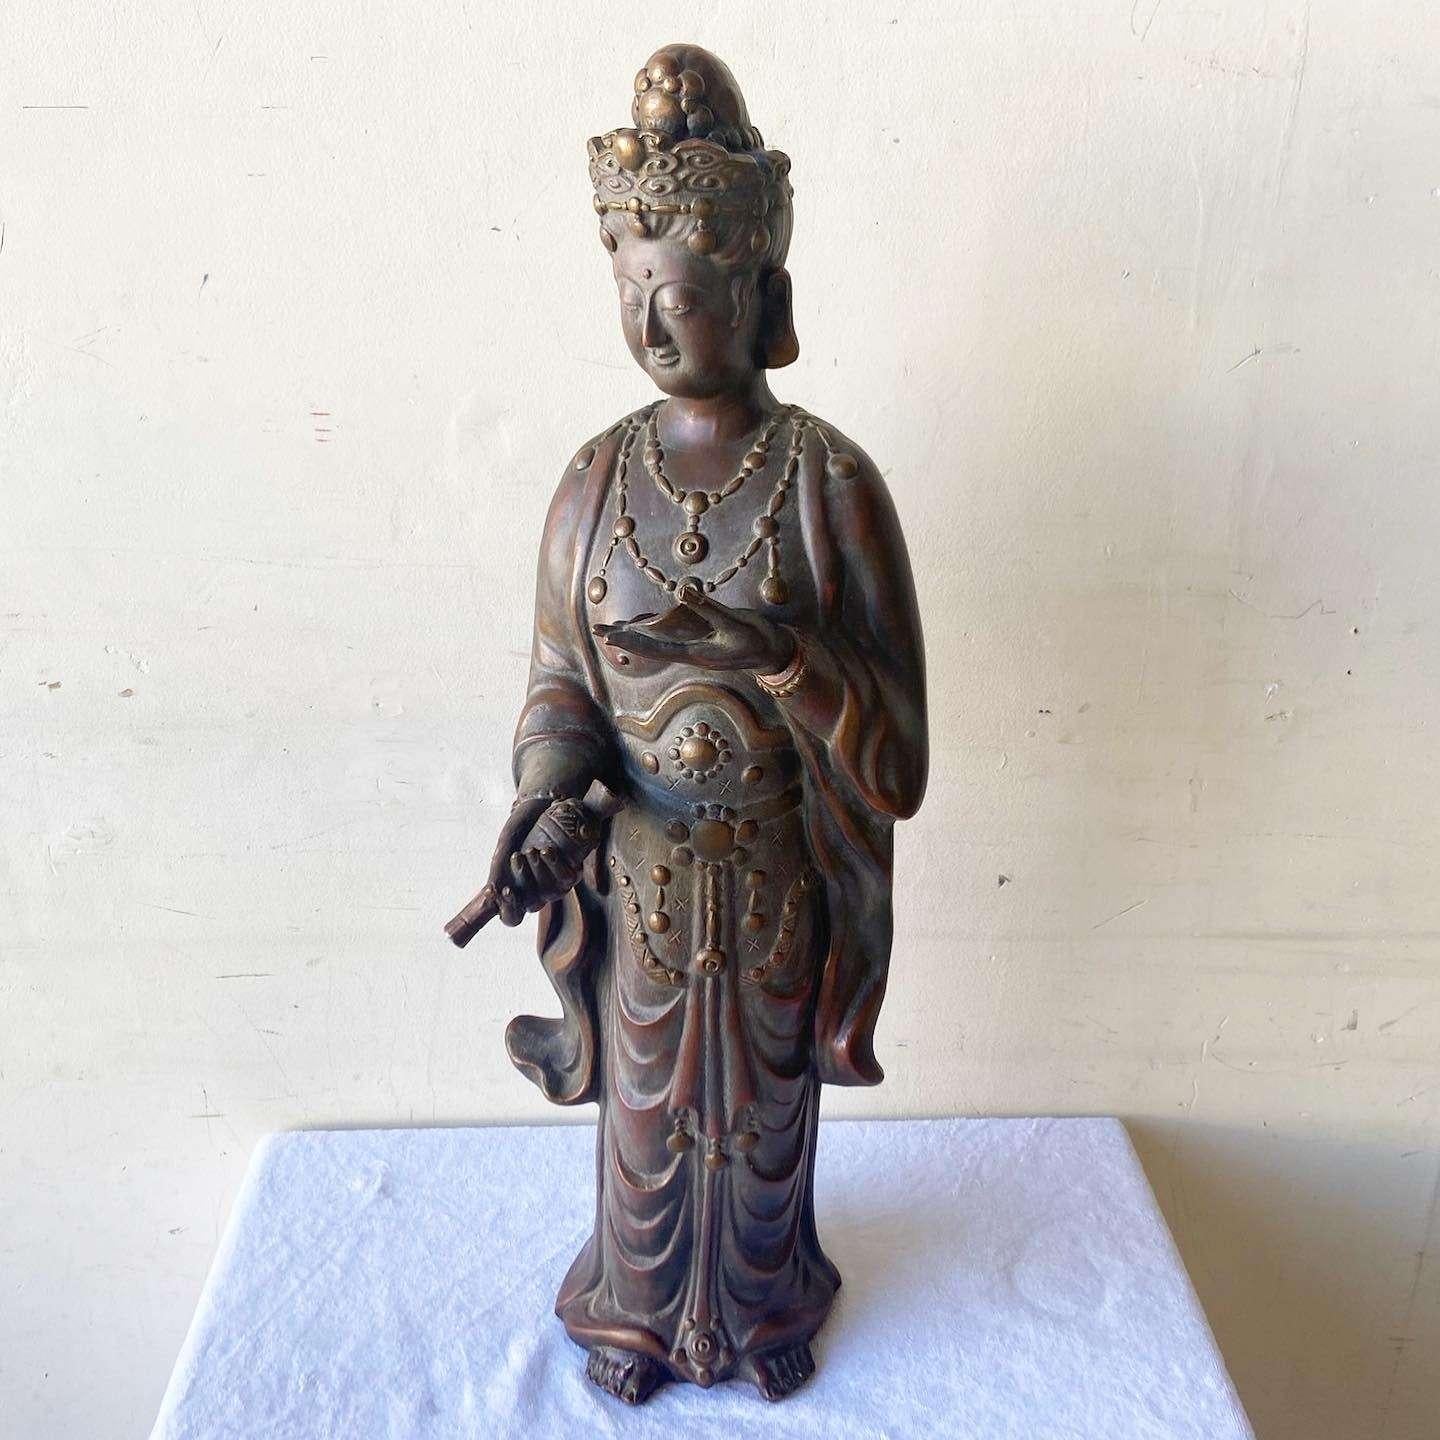 Incredible vintage Chinese ceramic sculpture. Subject is Kwan-yin Bodhisattva.
